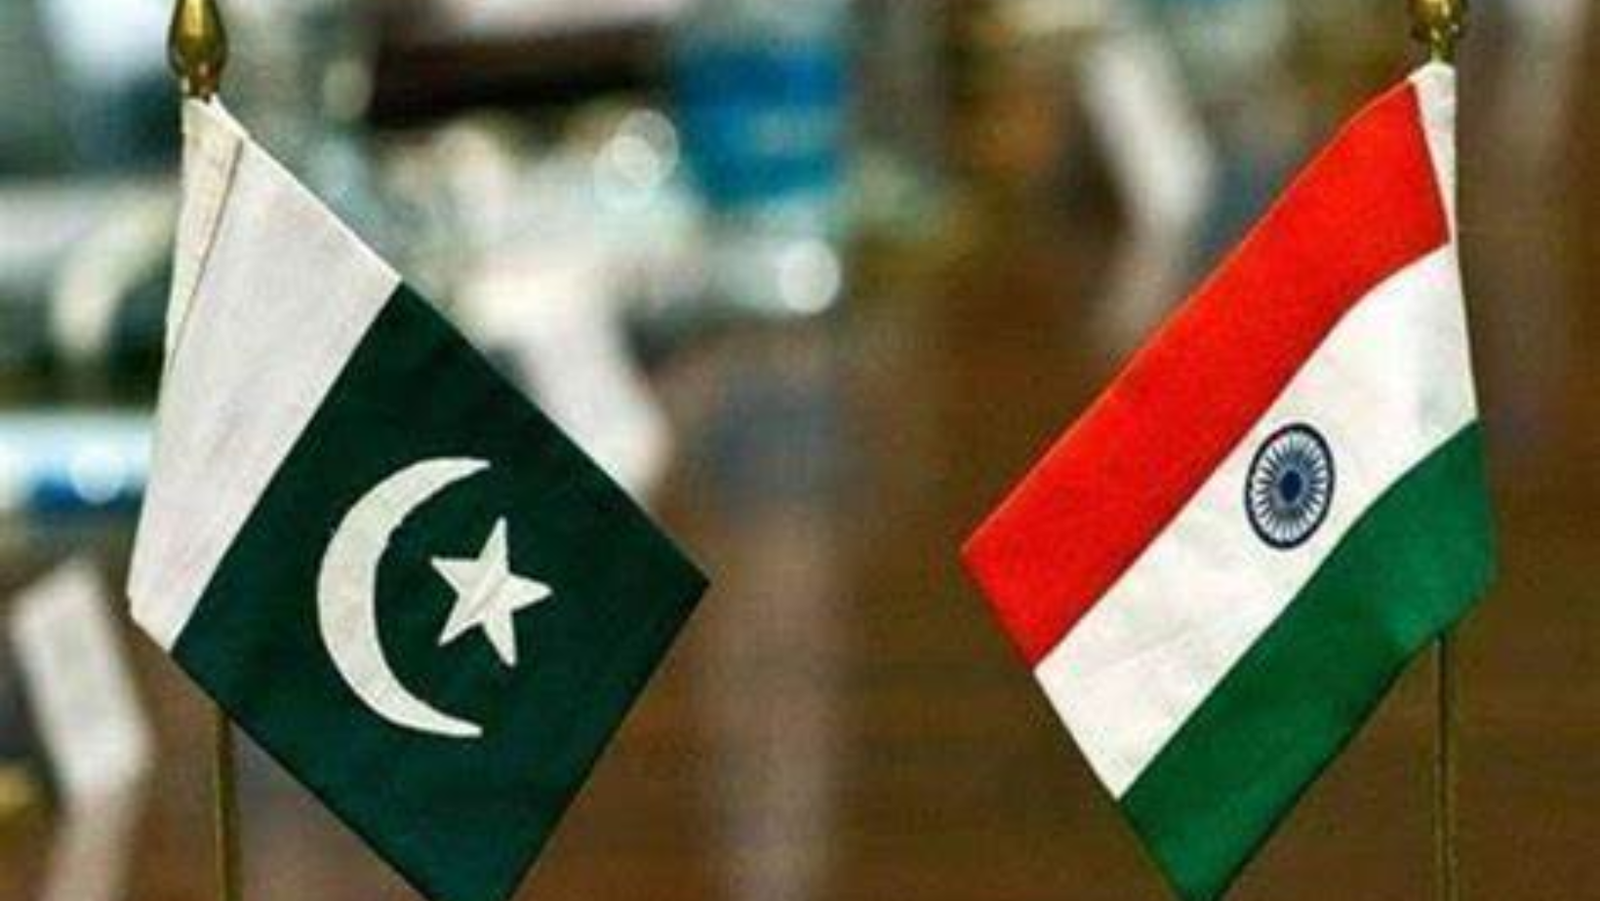 Pak-India "backchannel" negotiations come to a halt